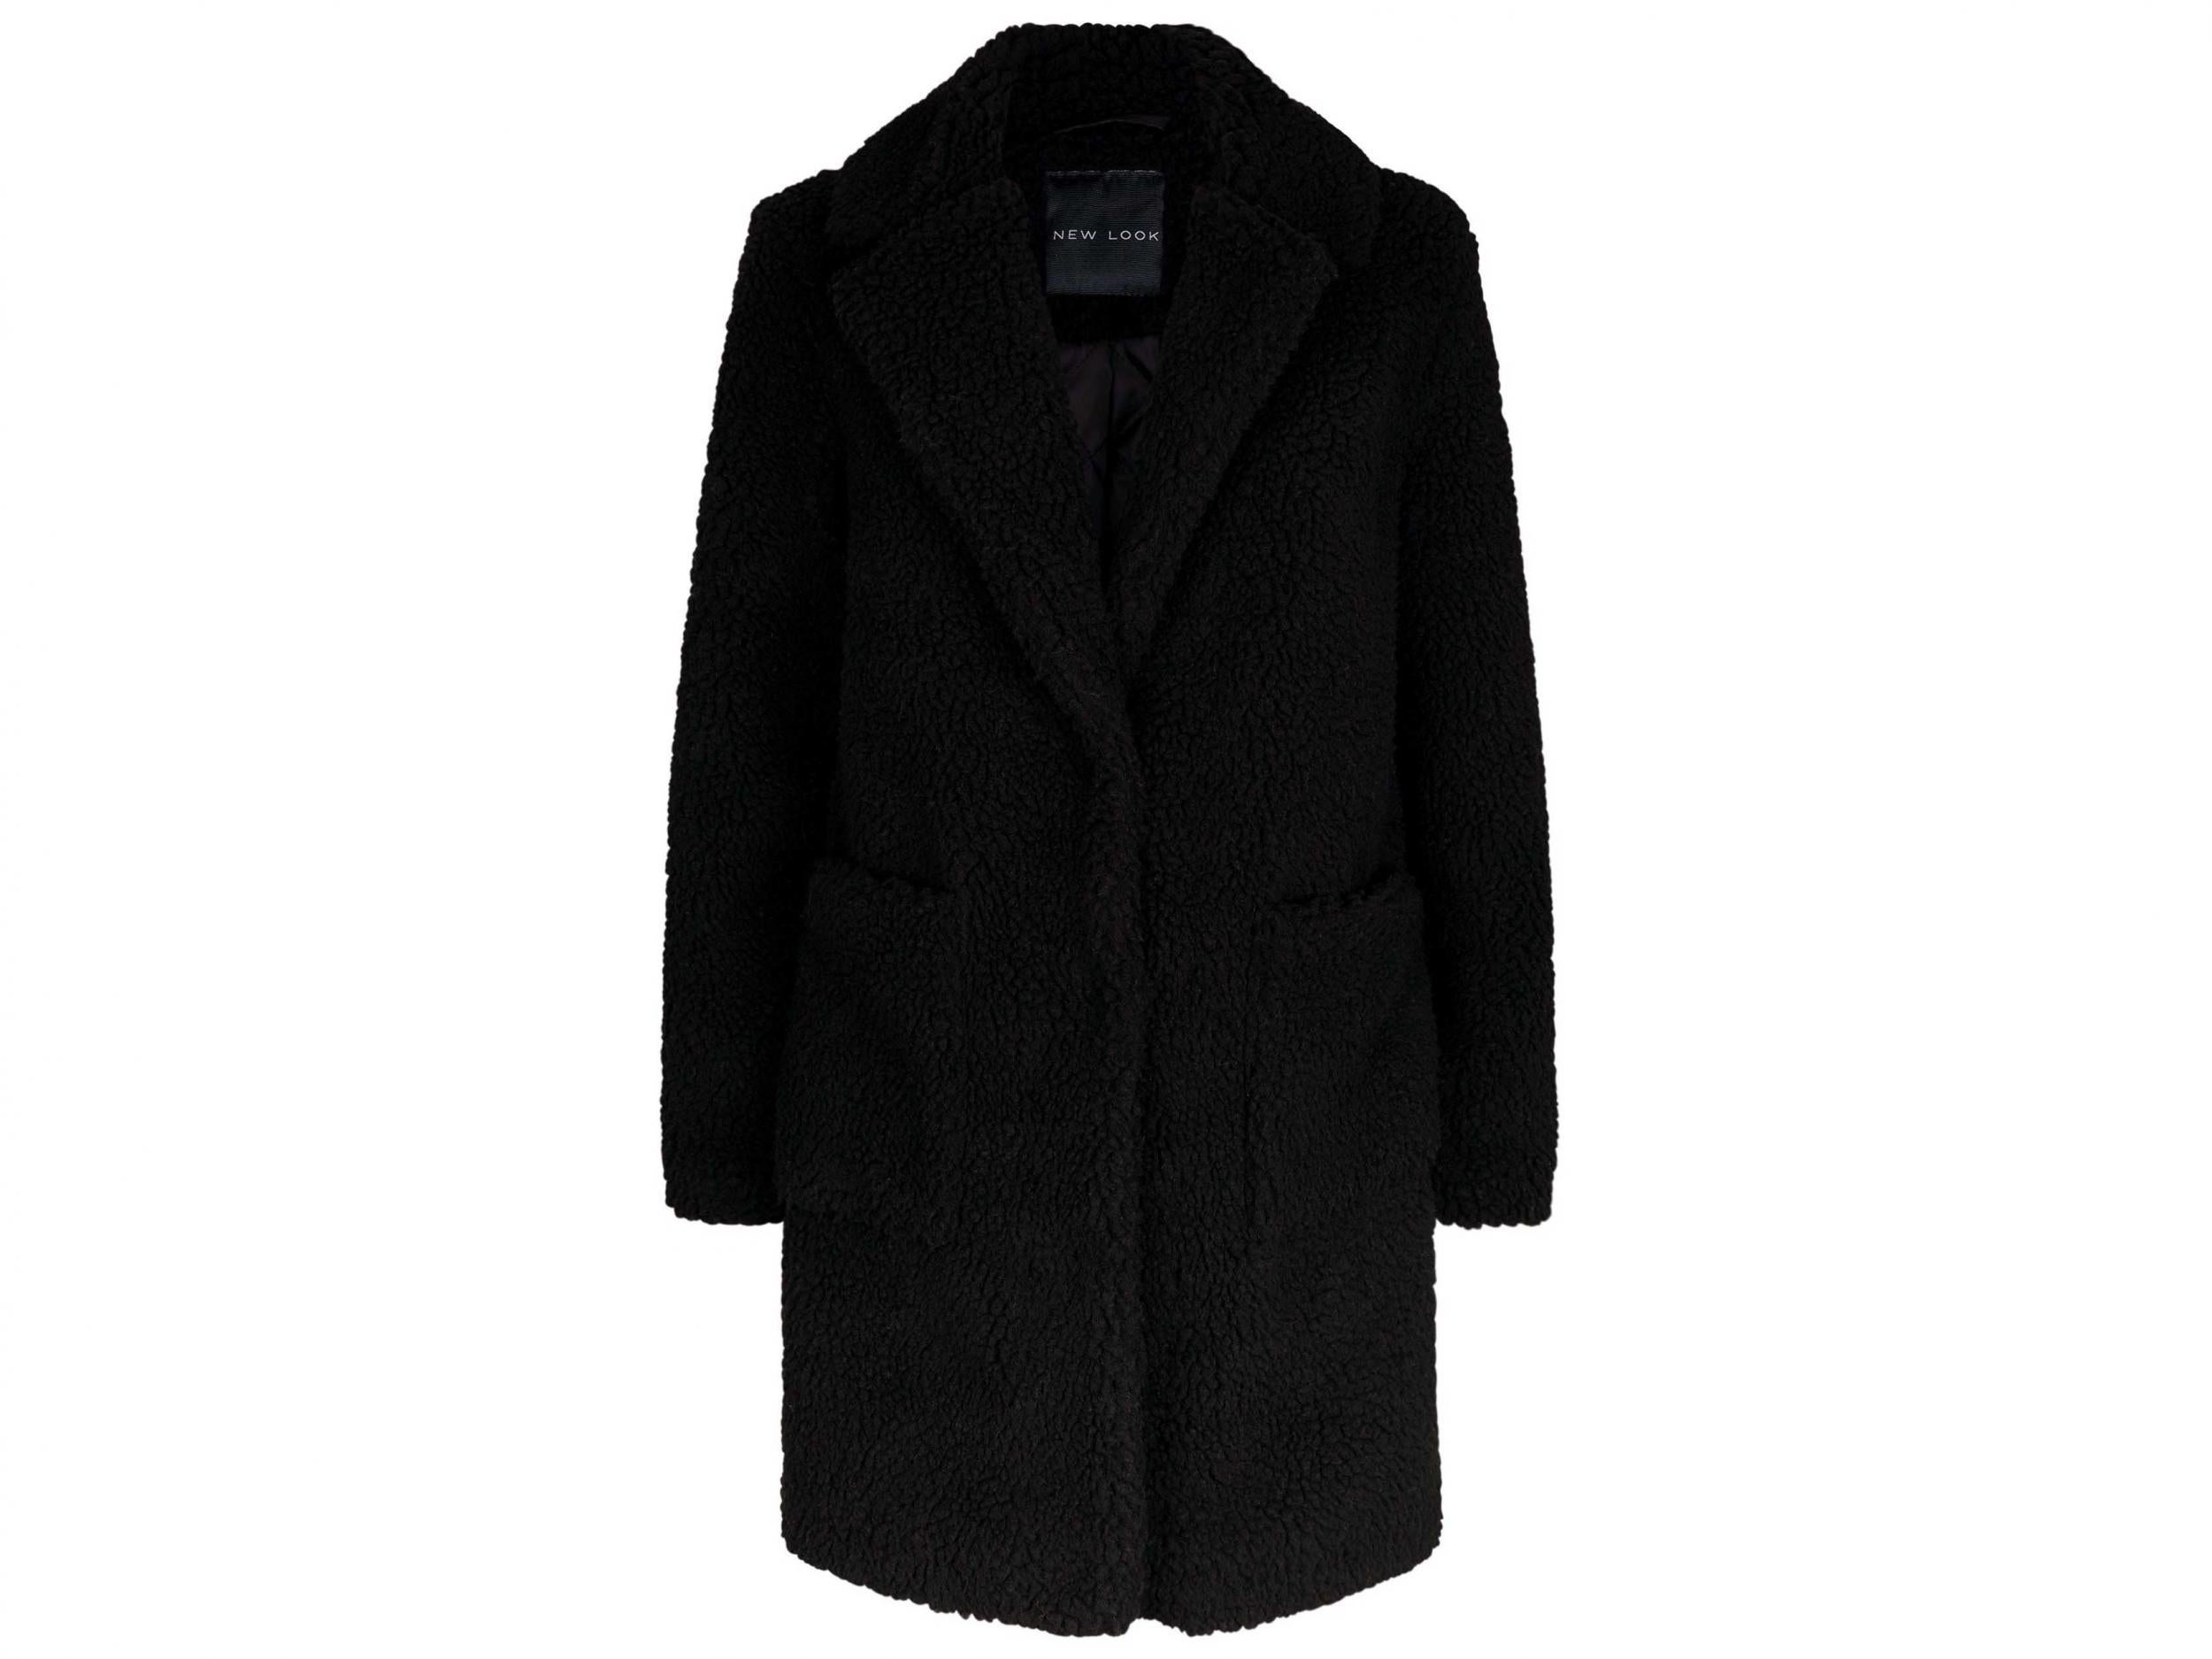 Black Teddy Coat, £39.99, New Look